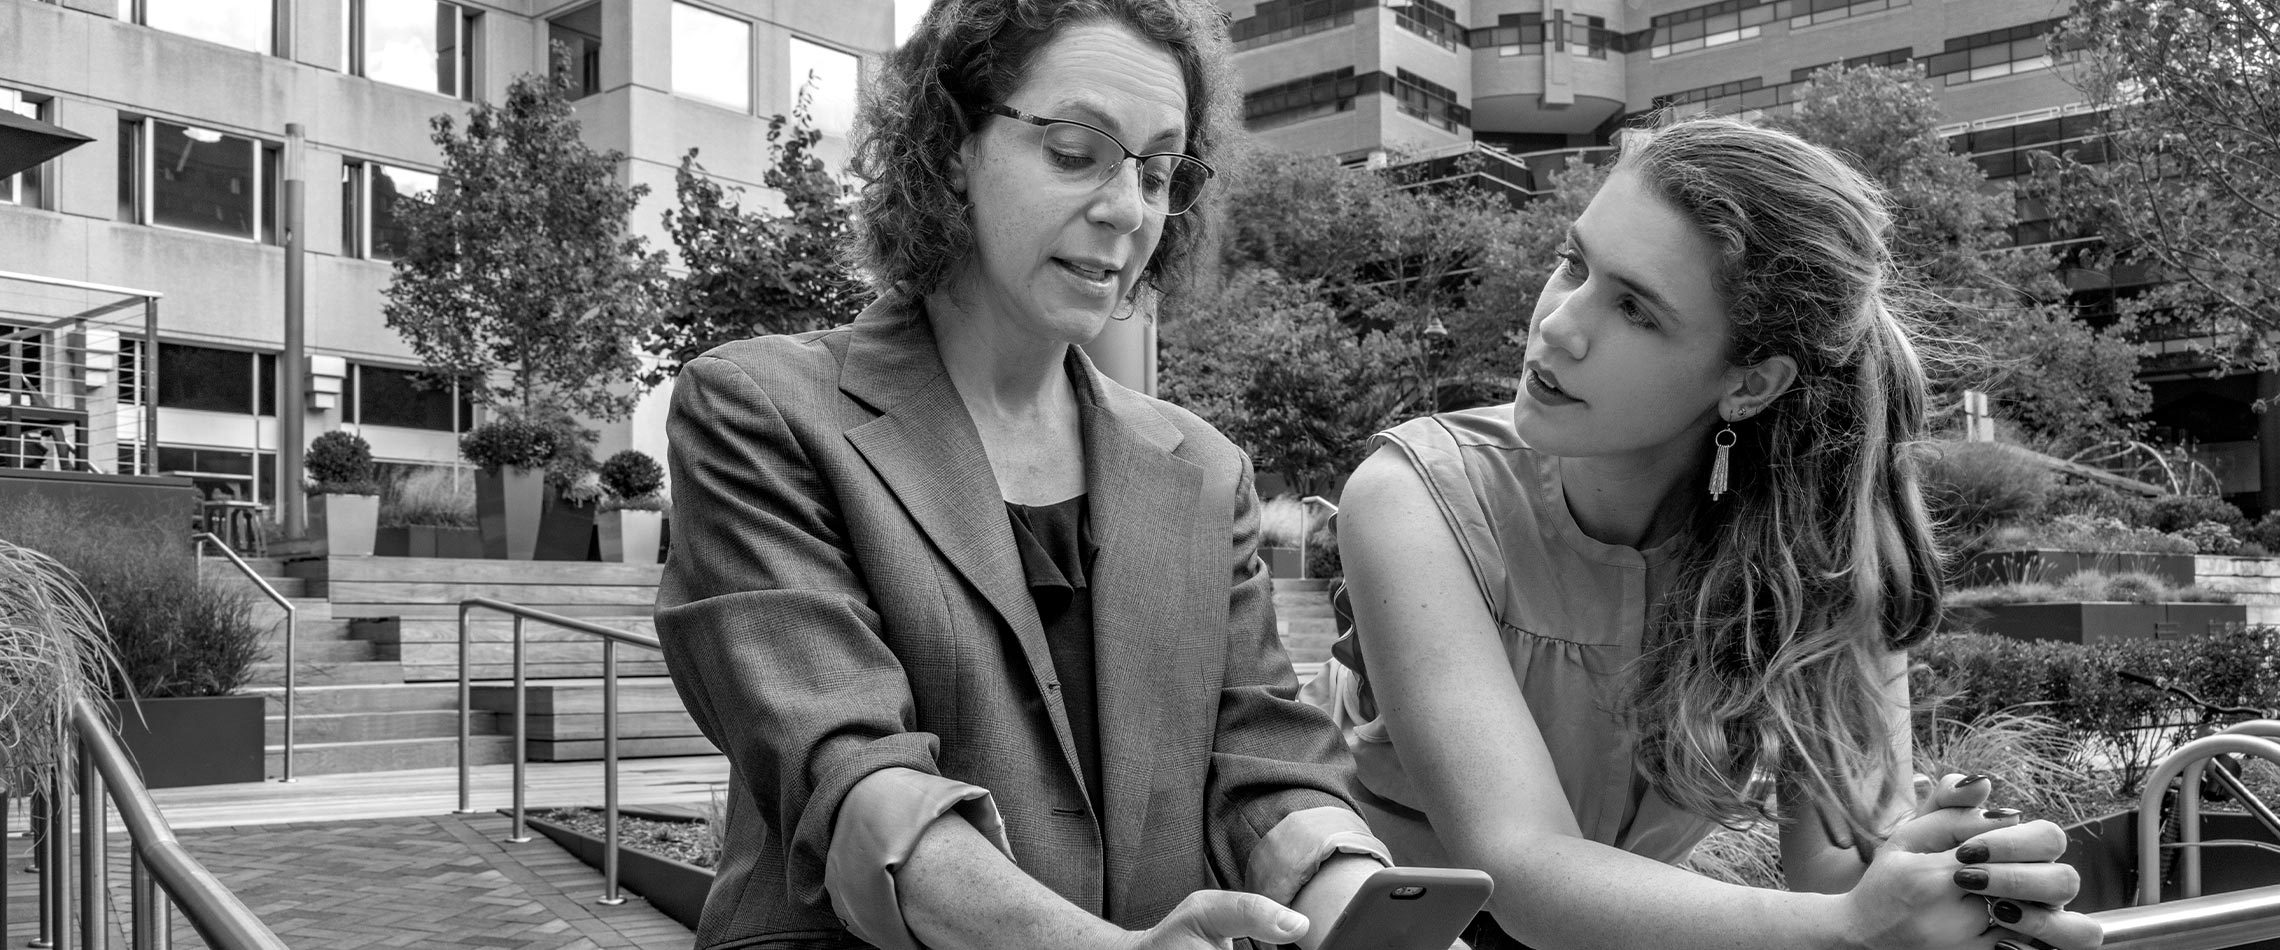 Michelle Ertischek and Erin Nealer talking outside in an urban environment.